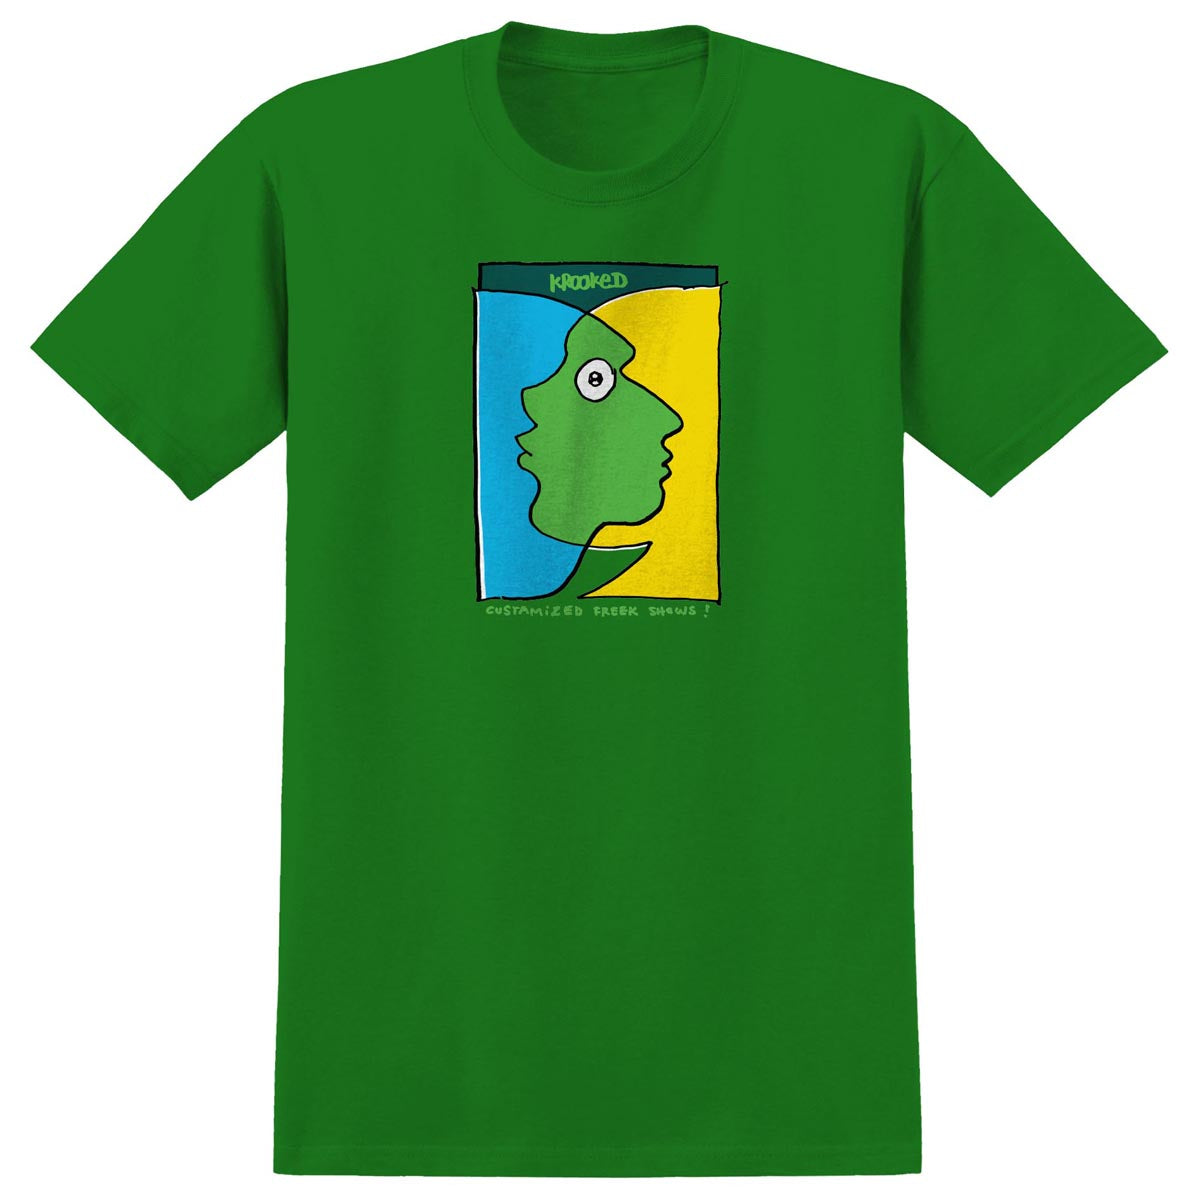 Krooked Freak Show T-Shirt - Irish Green/Multi Color image 1